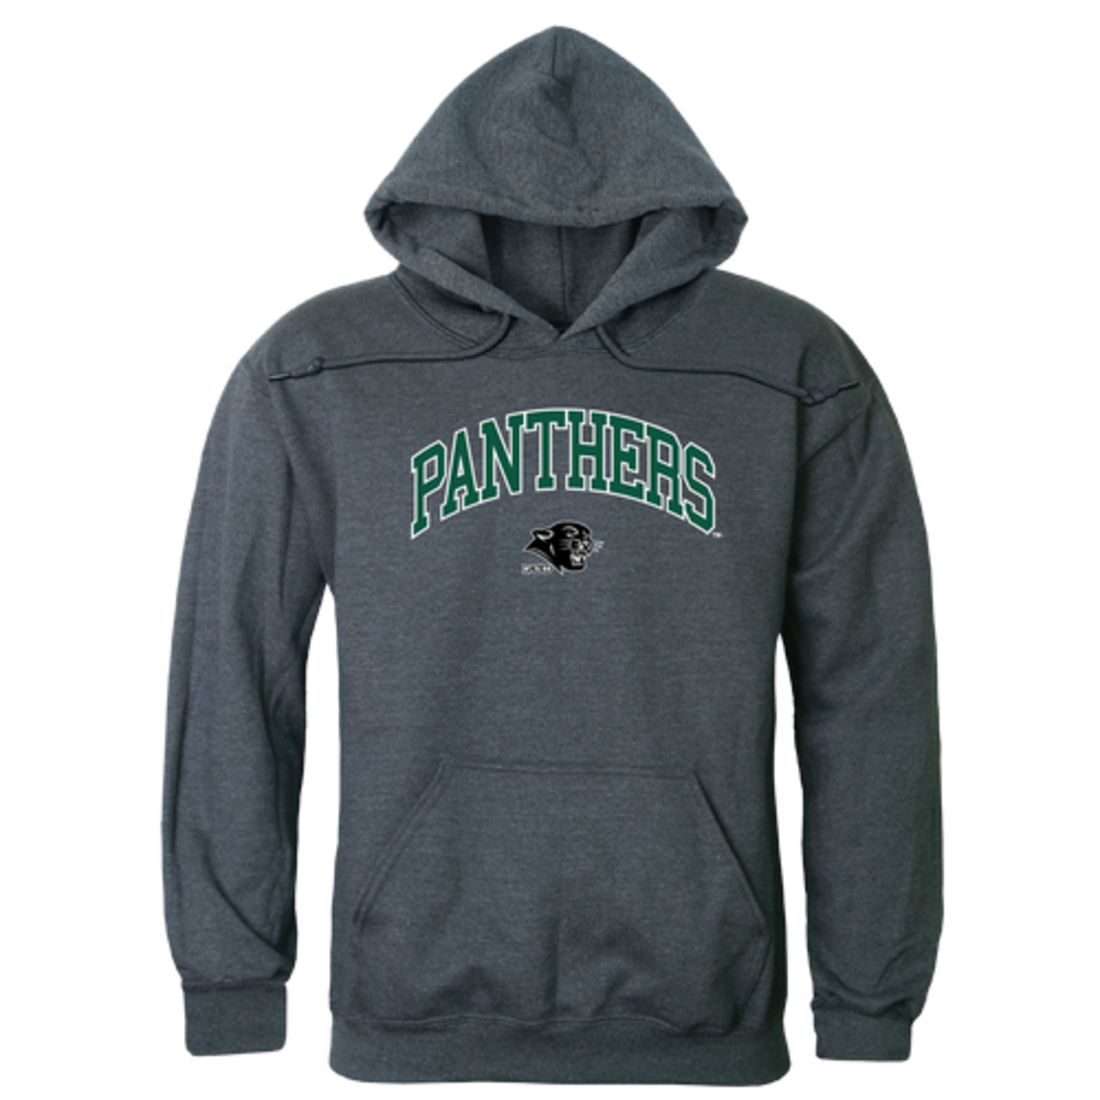 Plymouth State University Panthers Campus Fleece Hoodie Sweatshirts